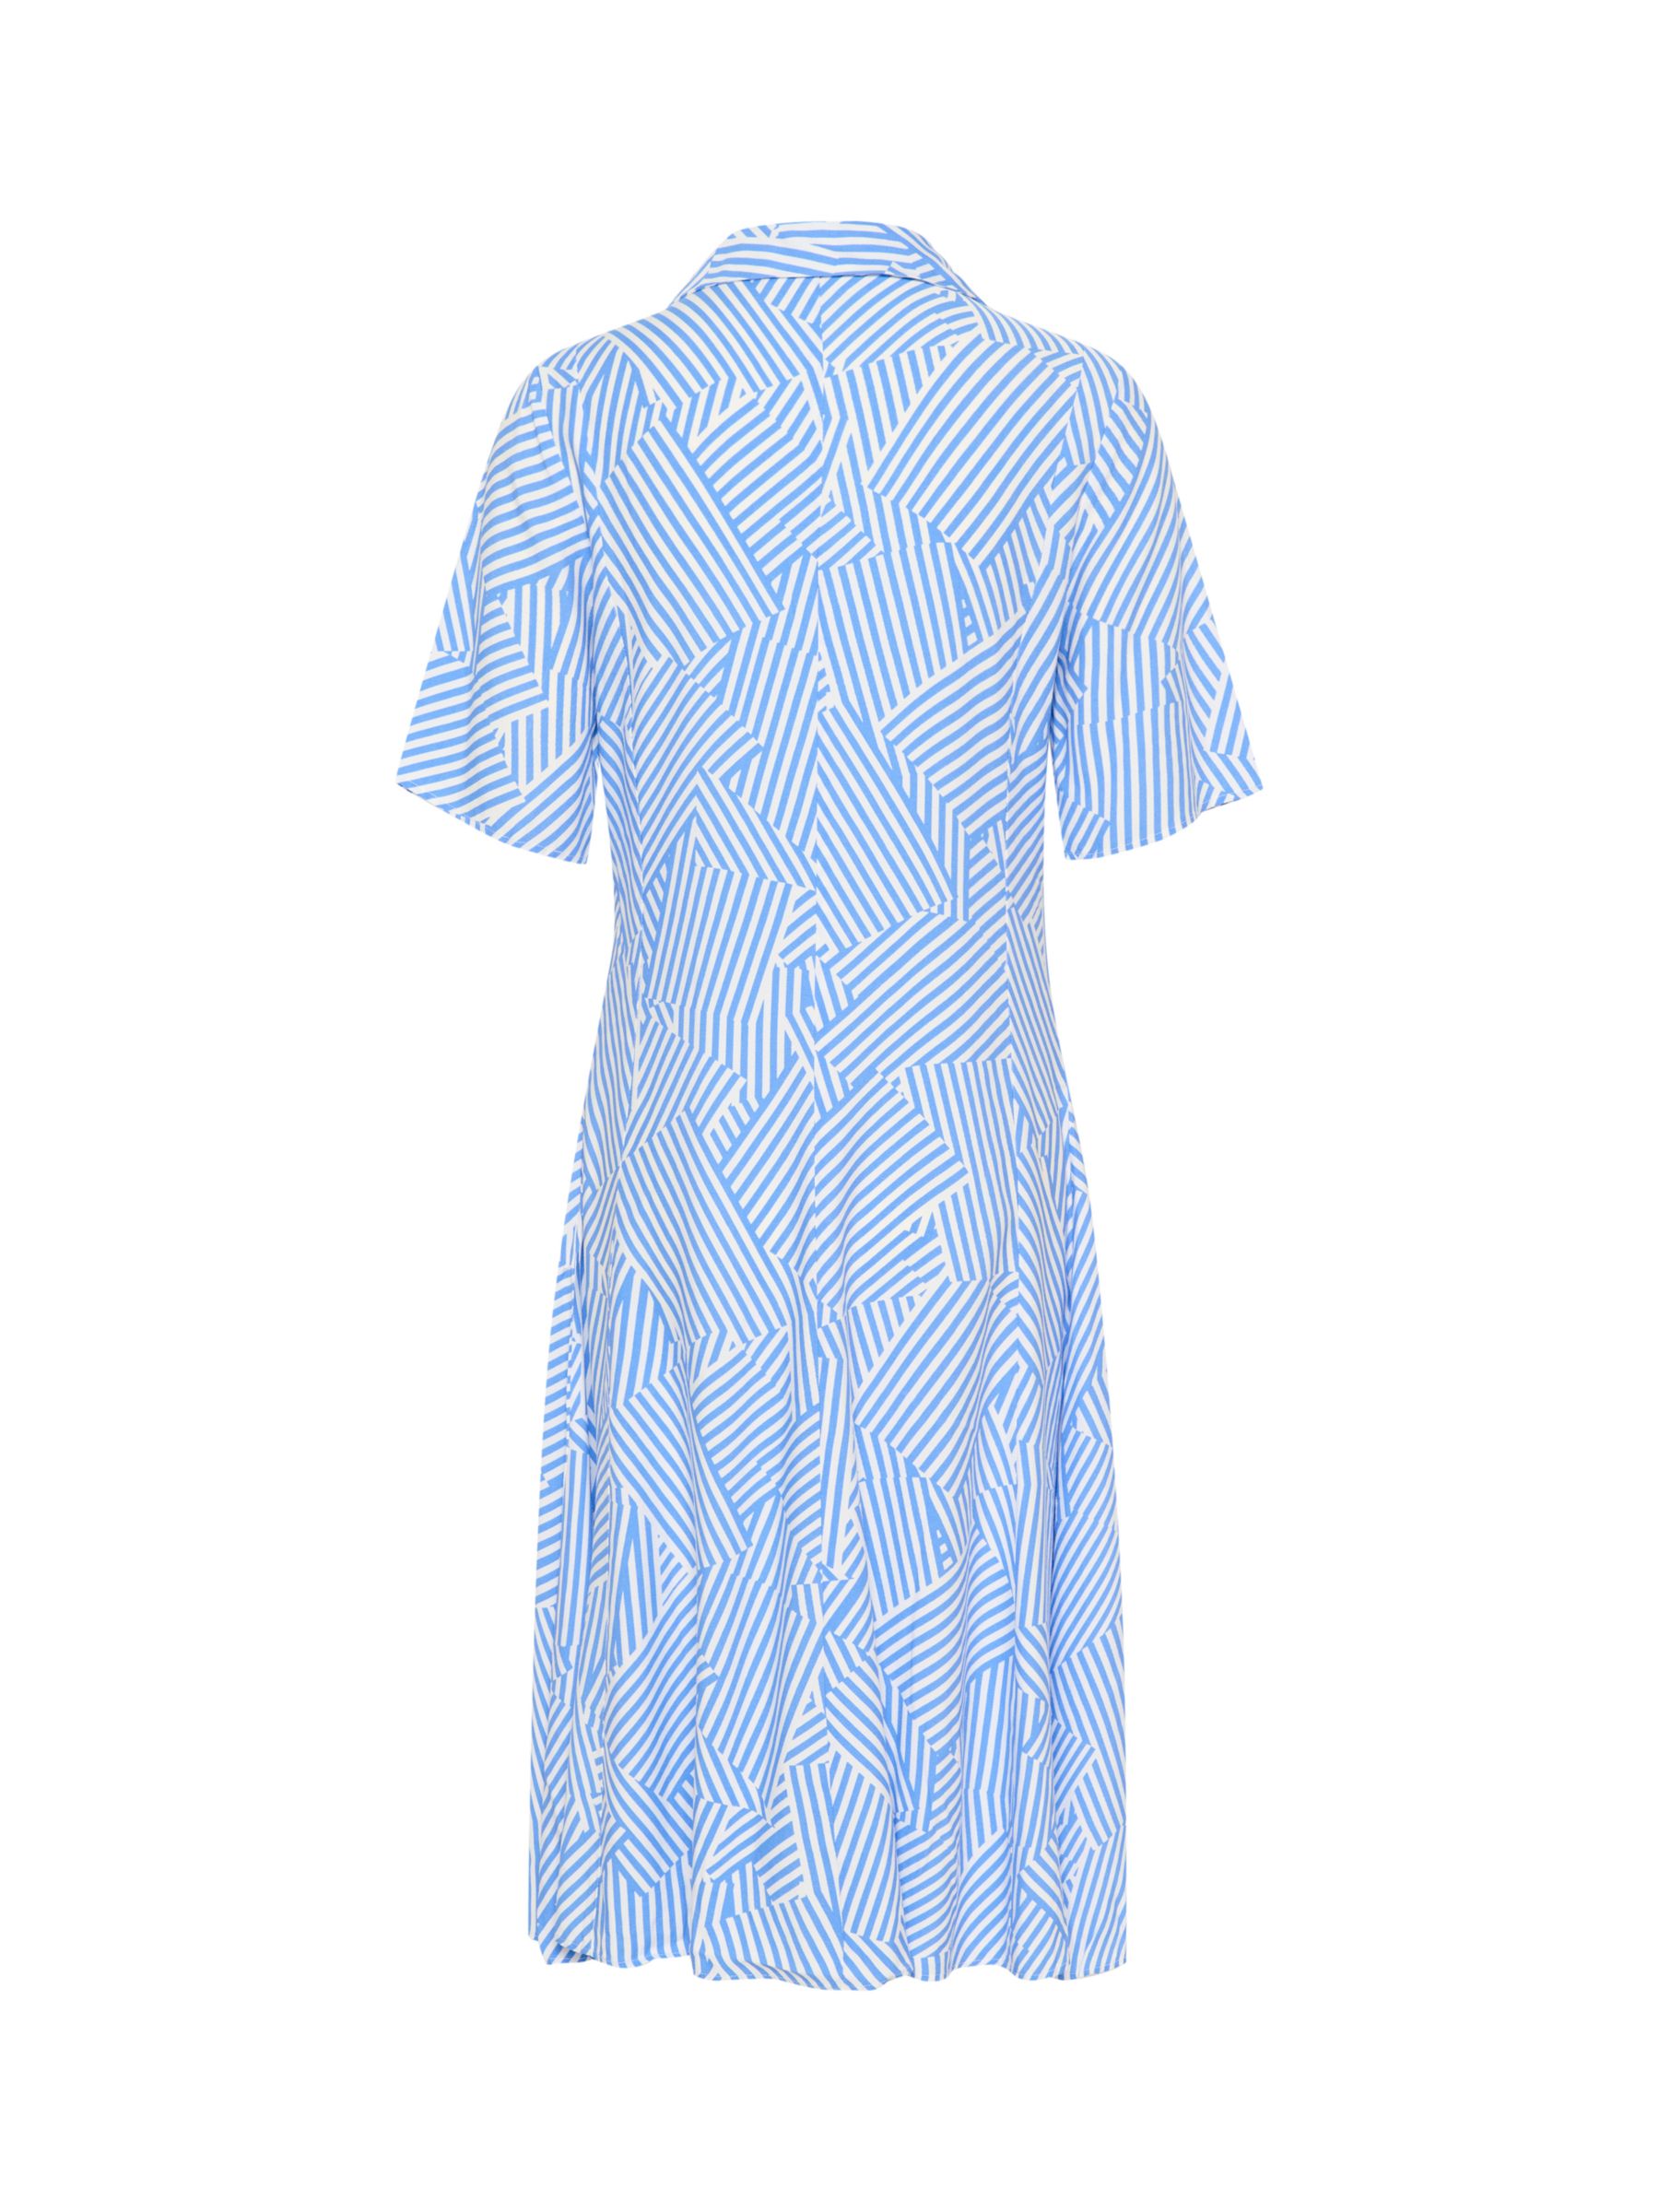 Saint Tropez Elyse Abstract Print Midi Shirt Dress, Blue/White, XS